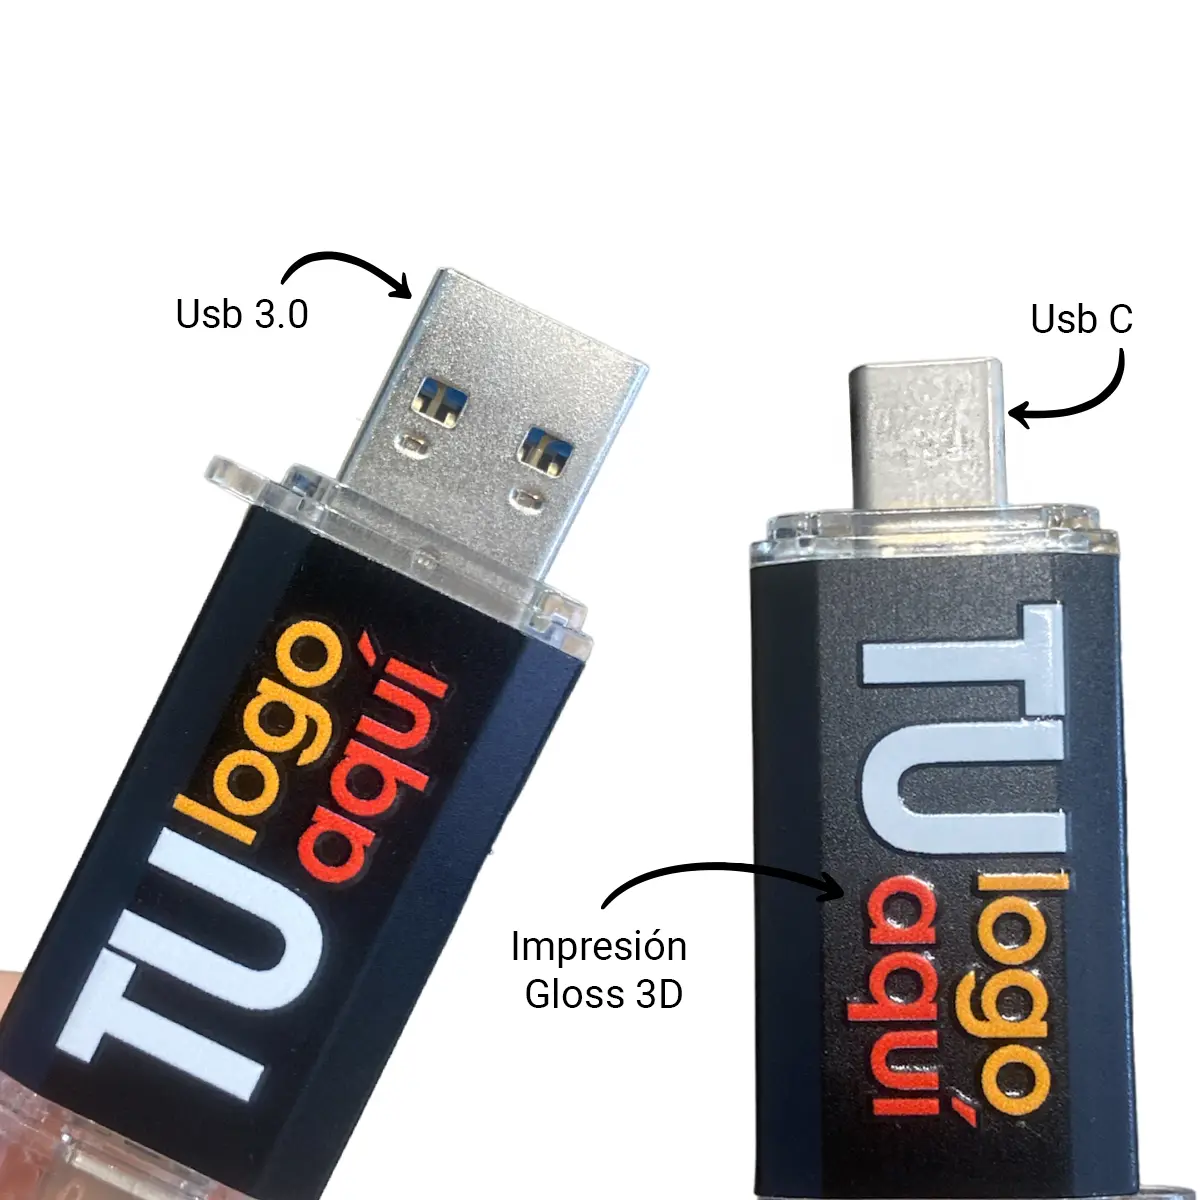 TE076-Pendrive-duo-USB-USB-C-pendrive-detalle